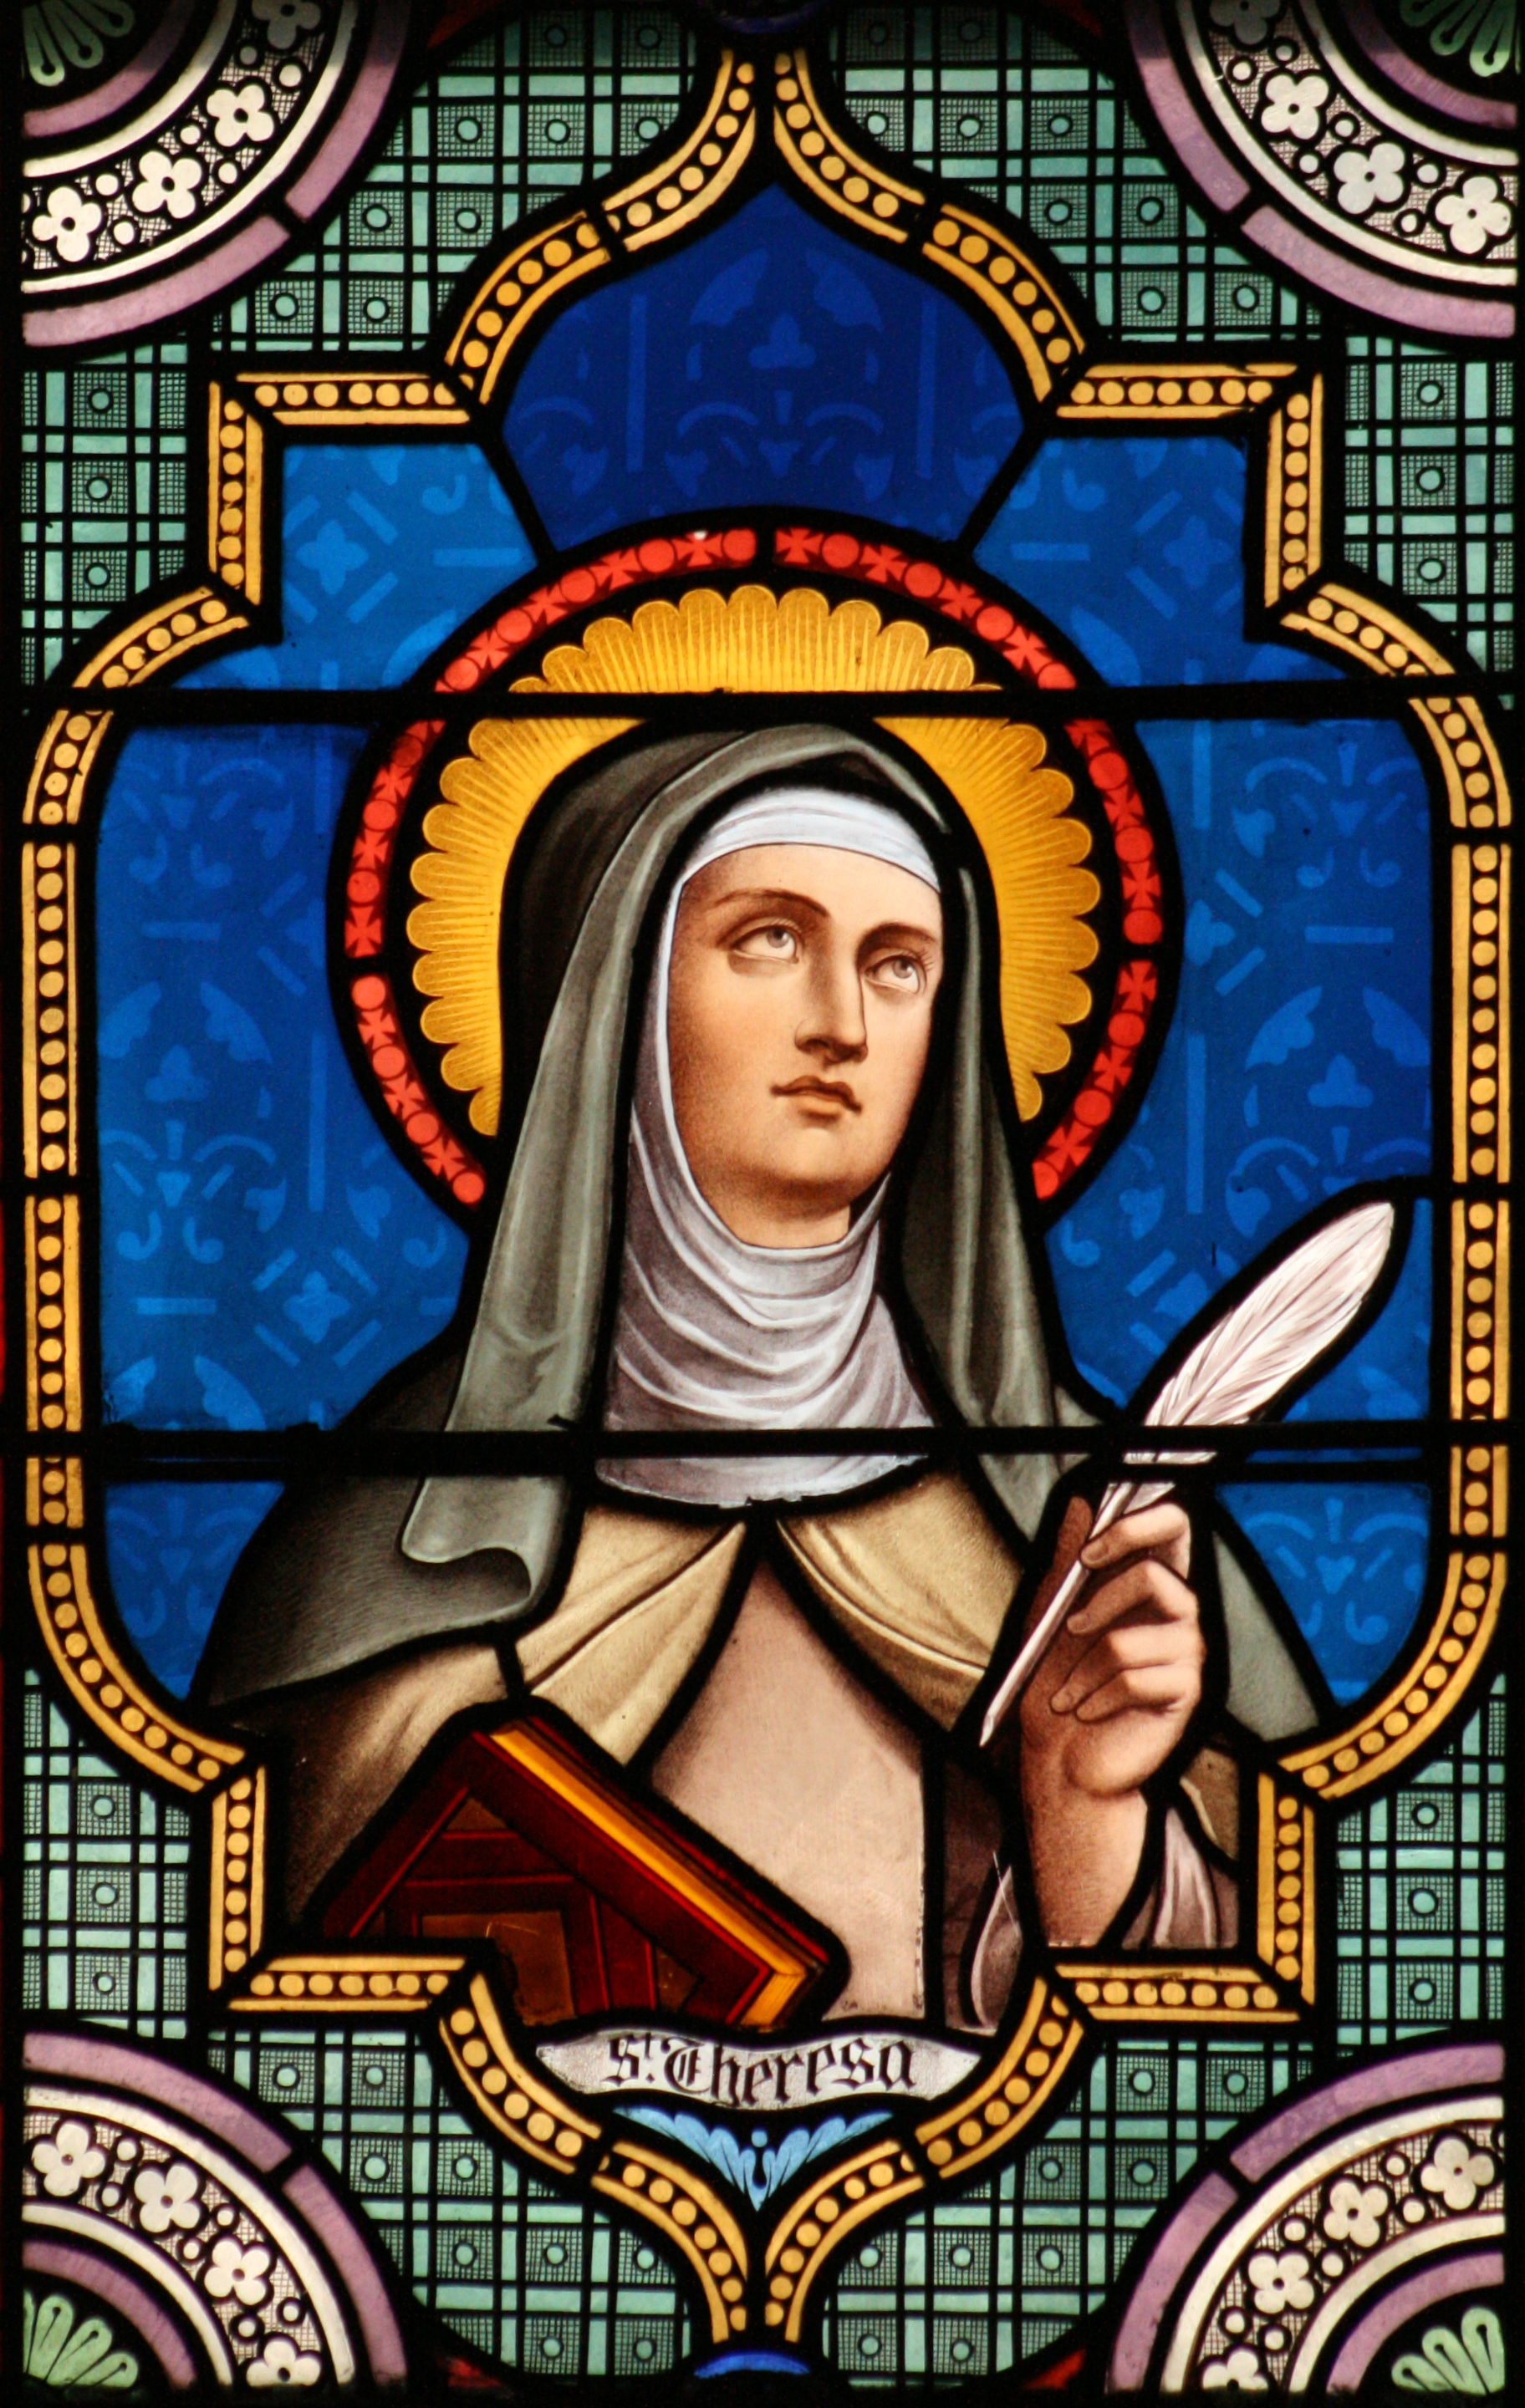 http://catholicsaints.info/saint-teresa-of-avila/